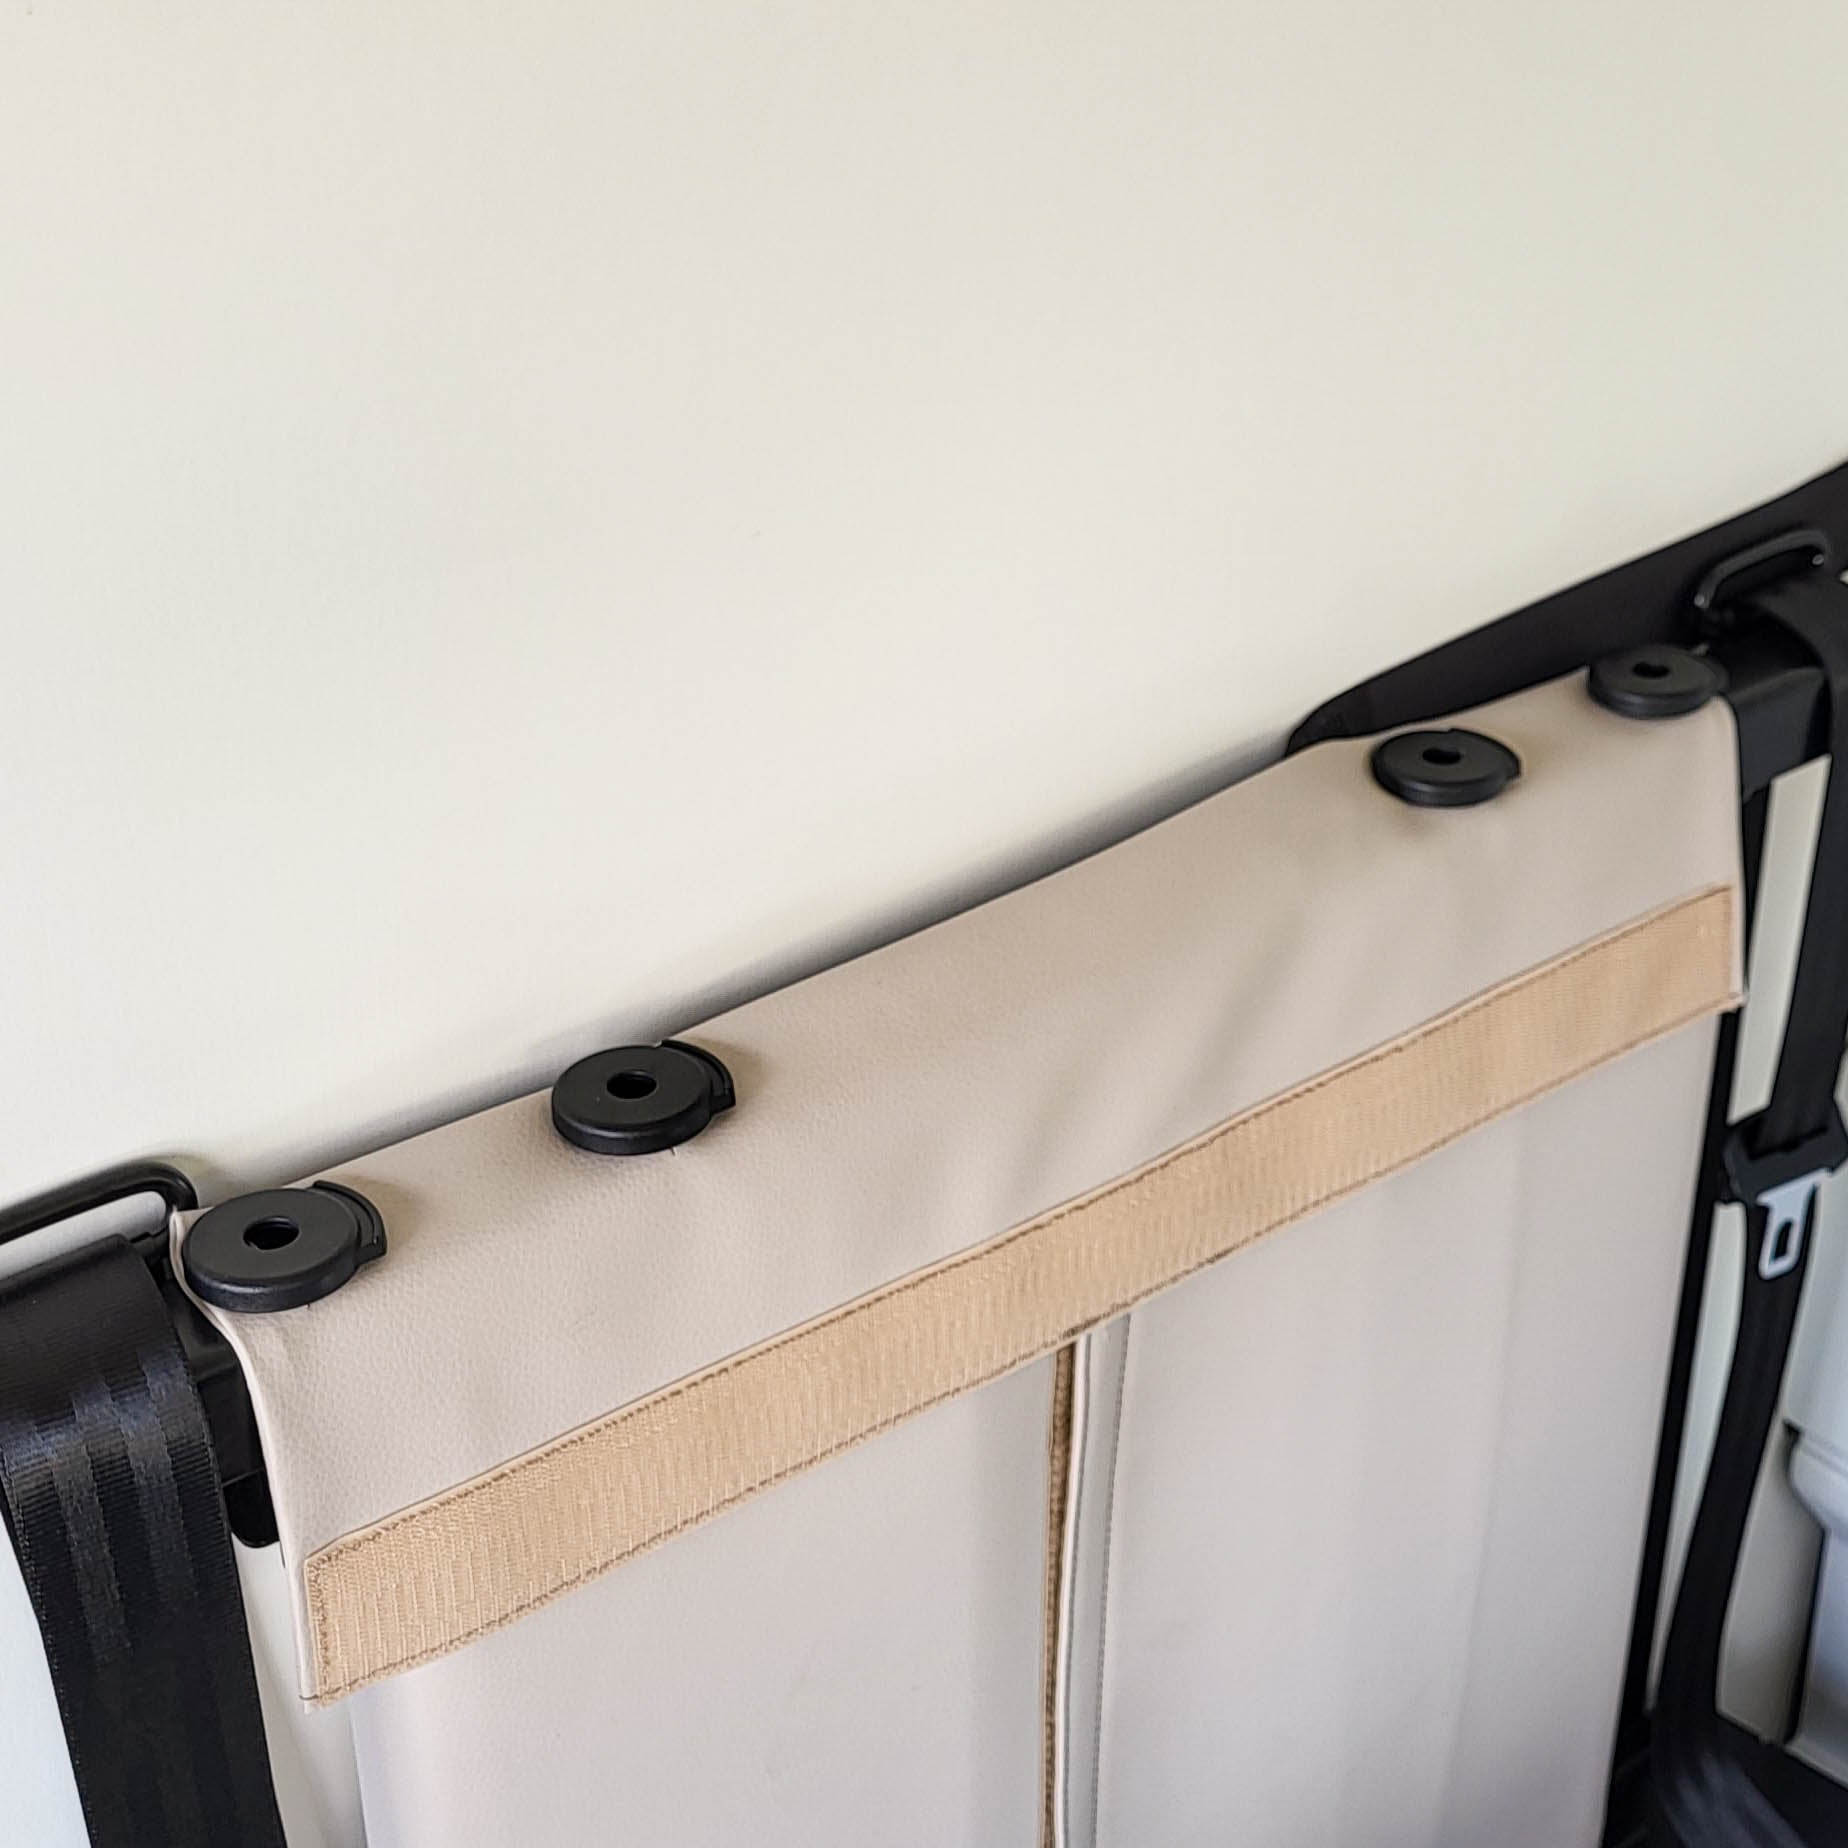 Storage board Adria Twin panel van from 2019